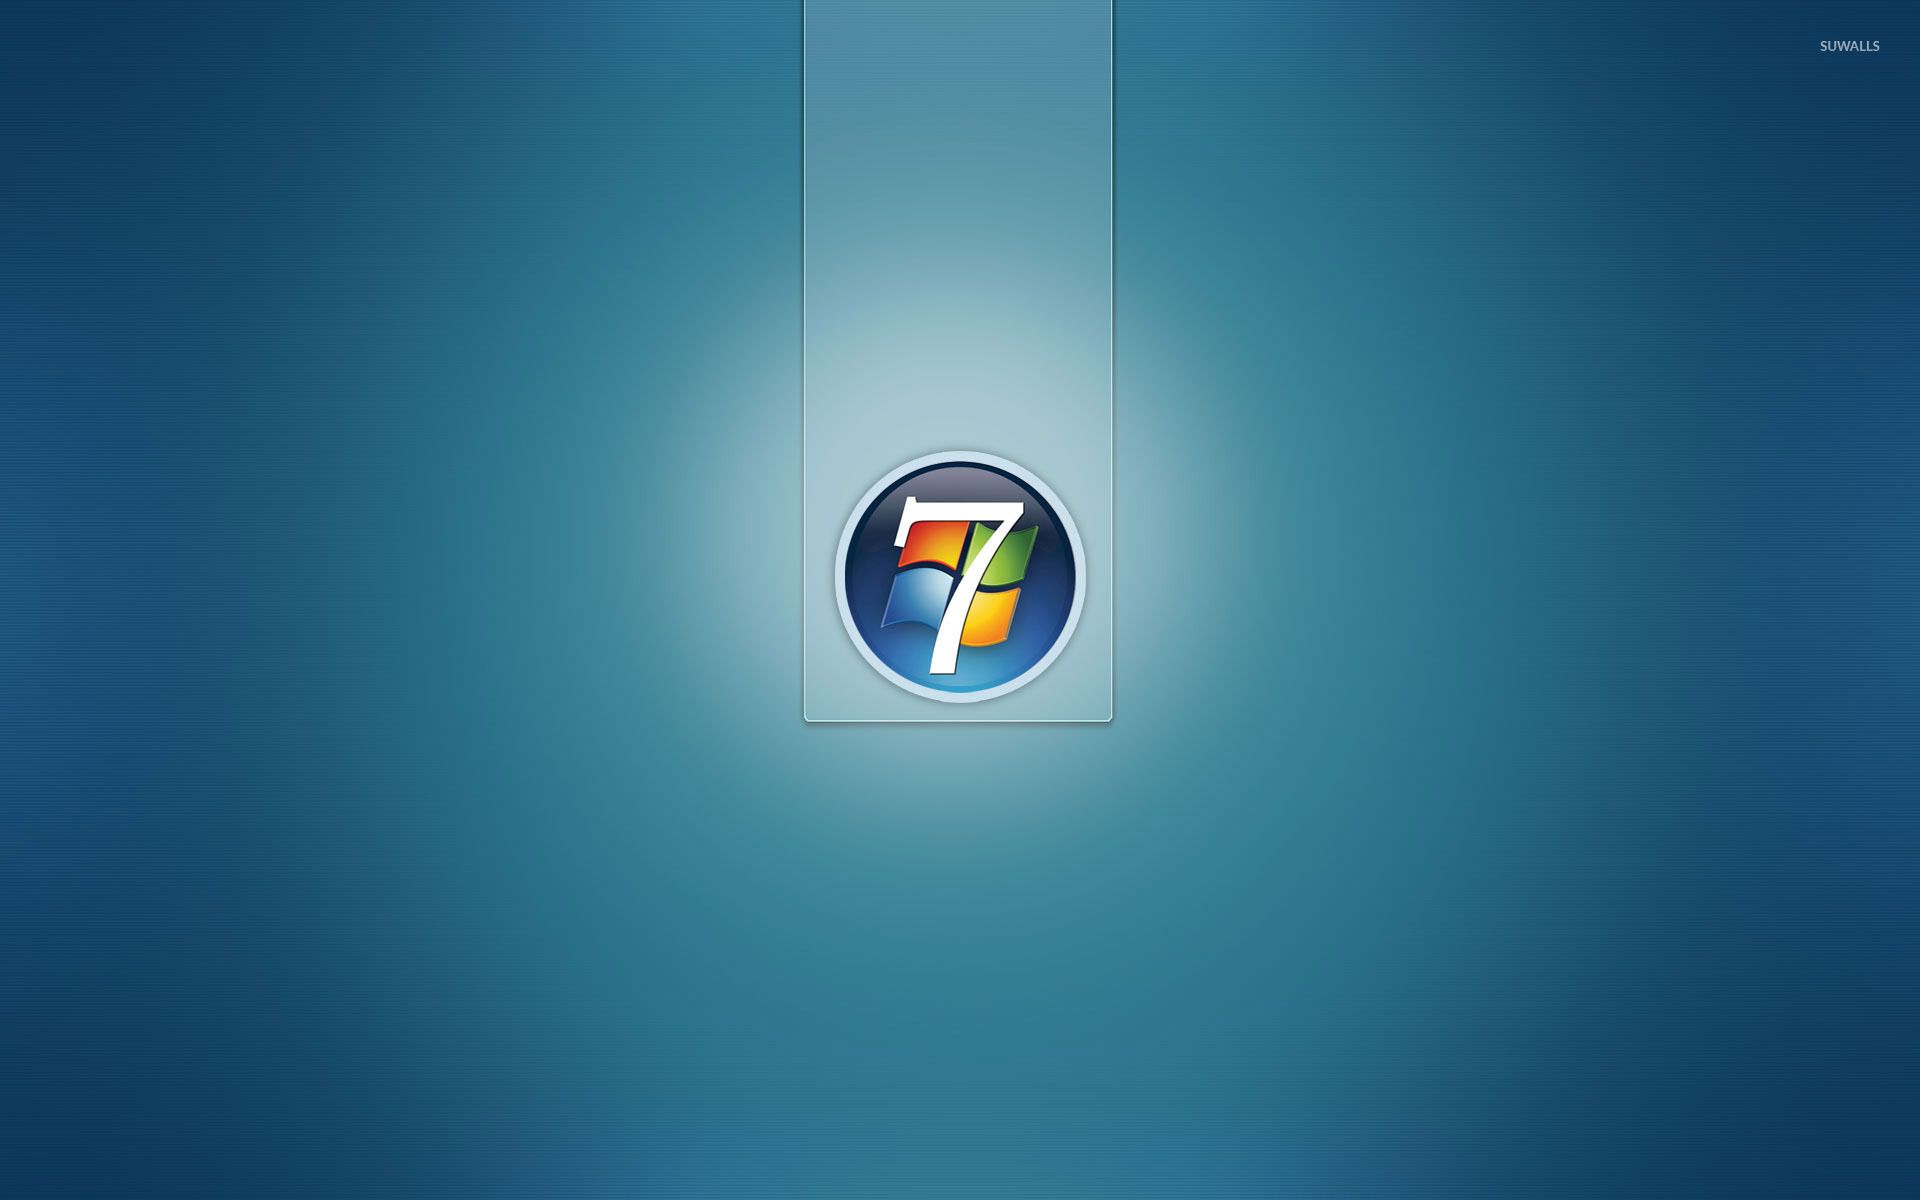 Light Windows 7 logo in a circle wallpaper wallpaper